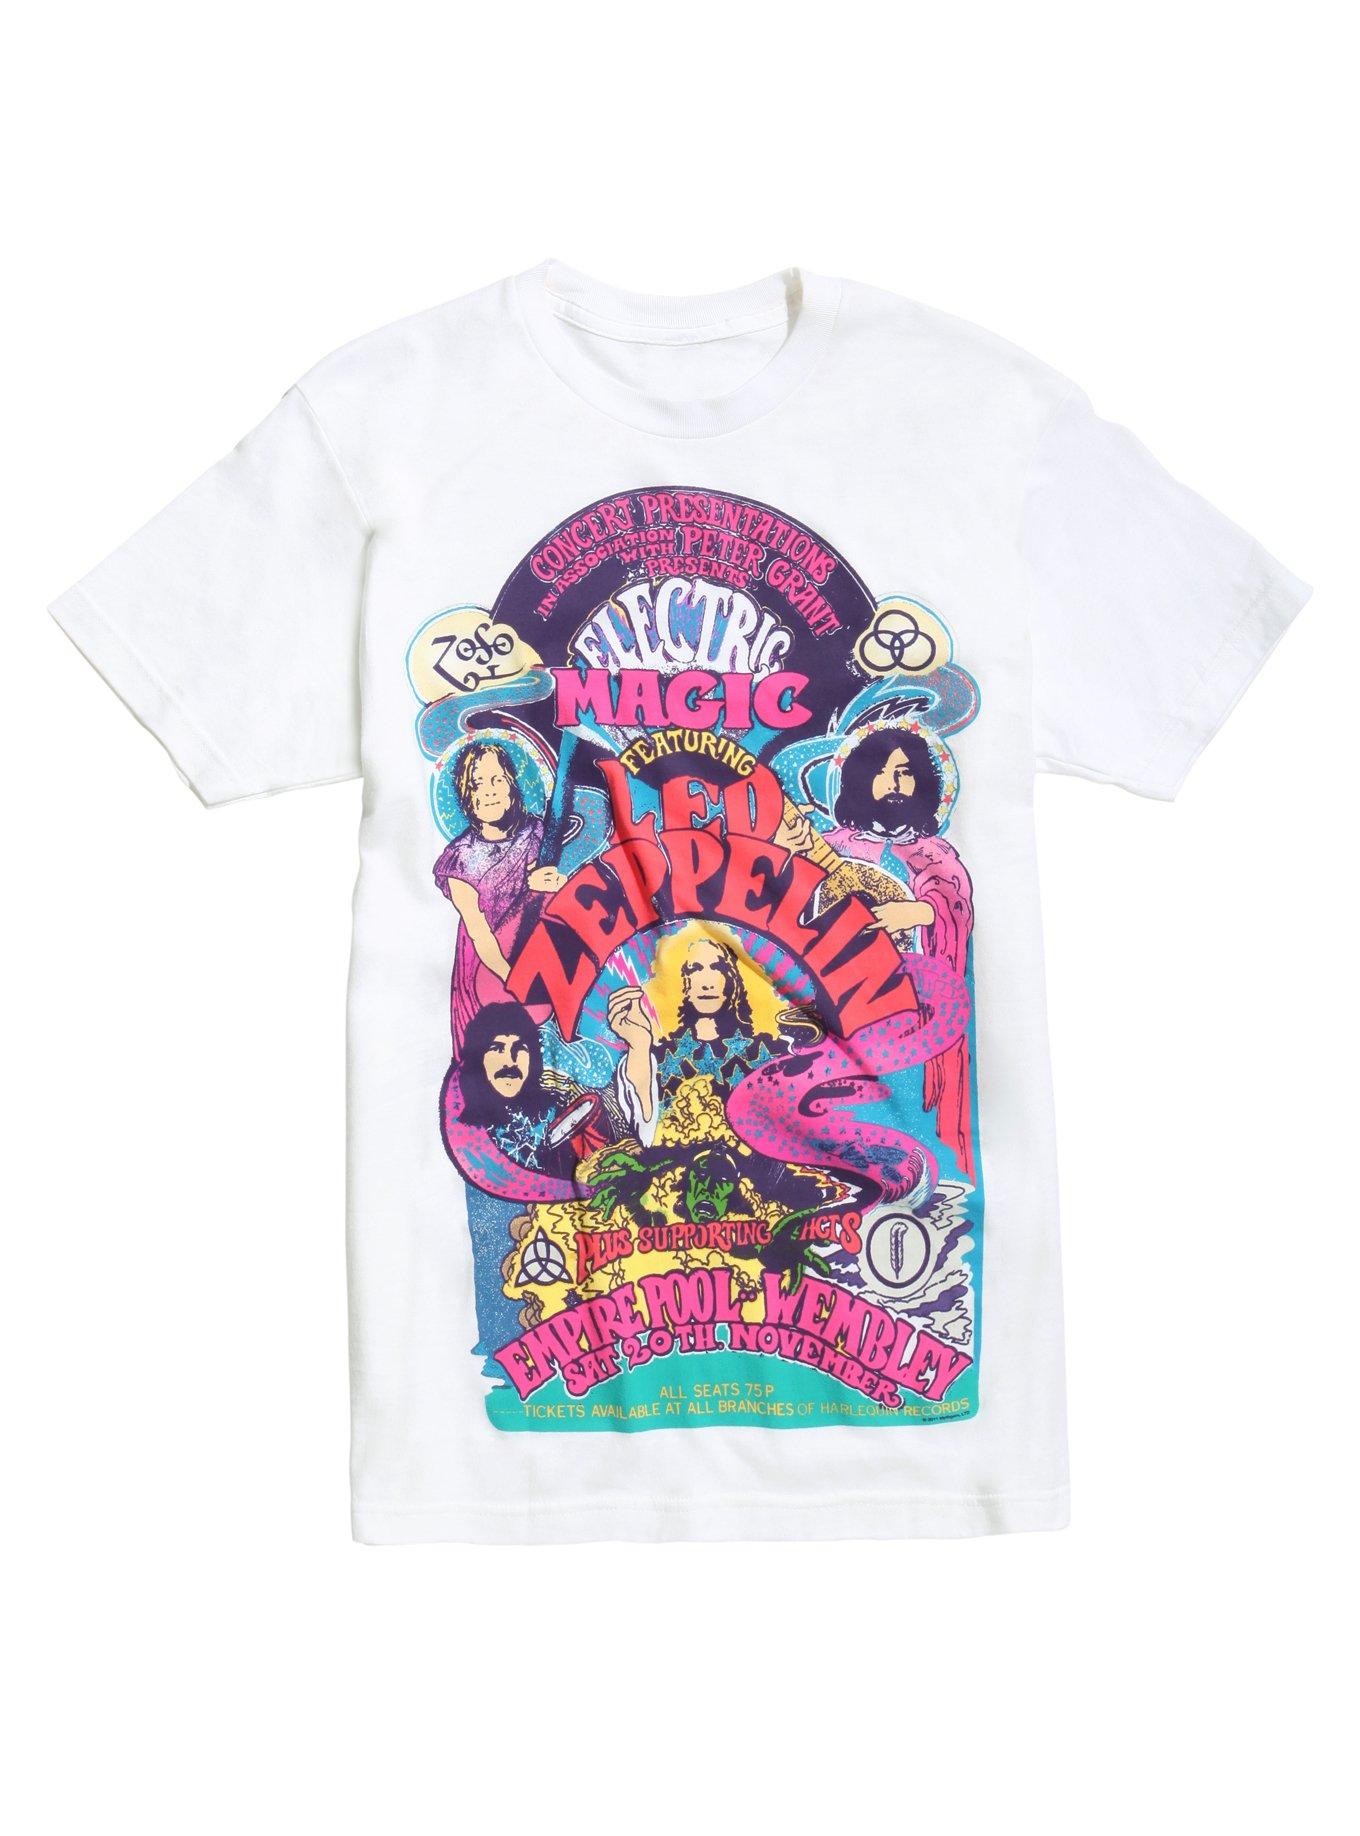 Led Zeppelin UK Tour T-Shirt | Hot Topic